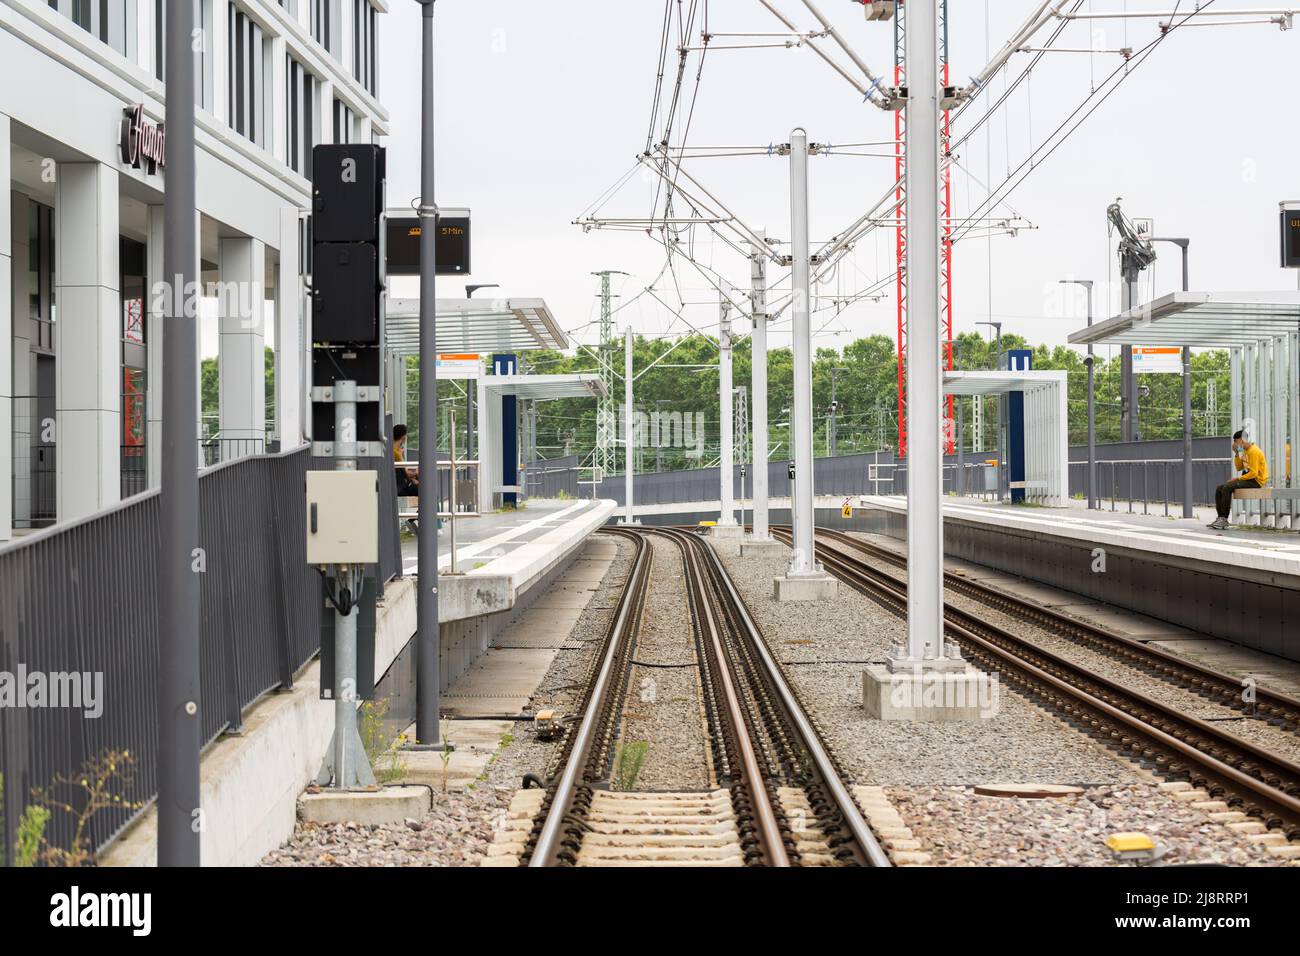 Stuttgart, Germany - Jul 28, 2021: View along the rails towards the U-Bahn (subway) station Stadtbibliothek. Stock Photo